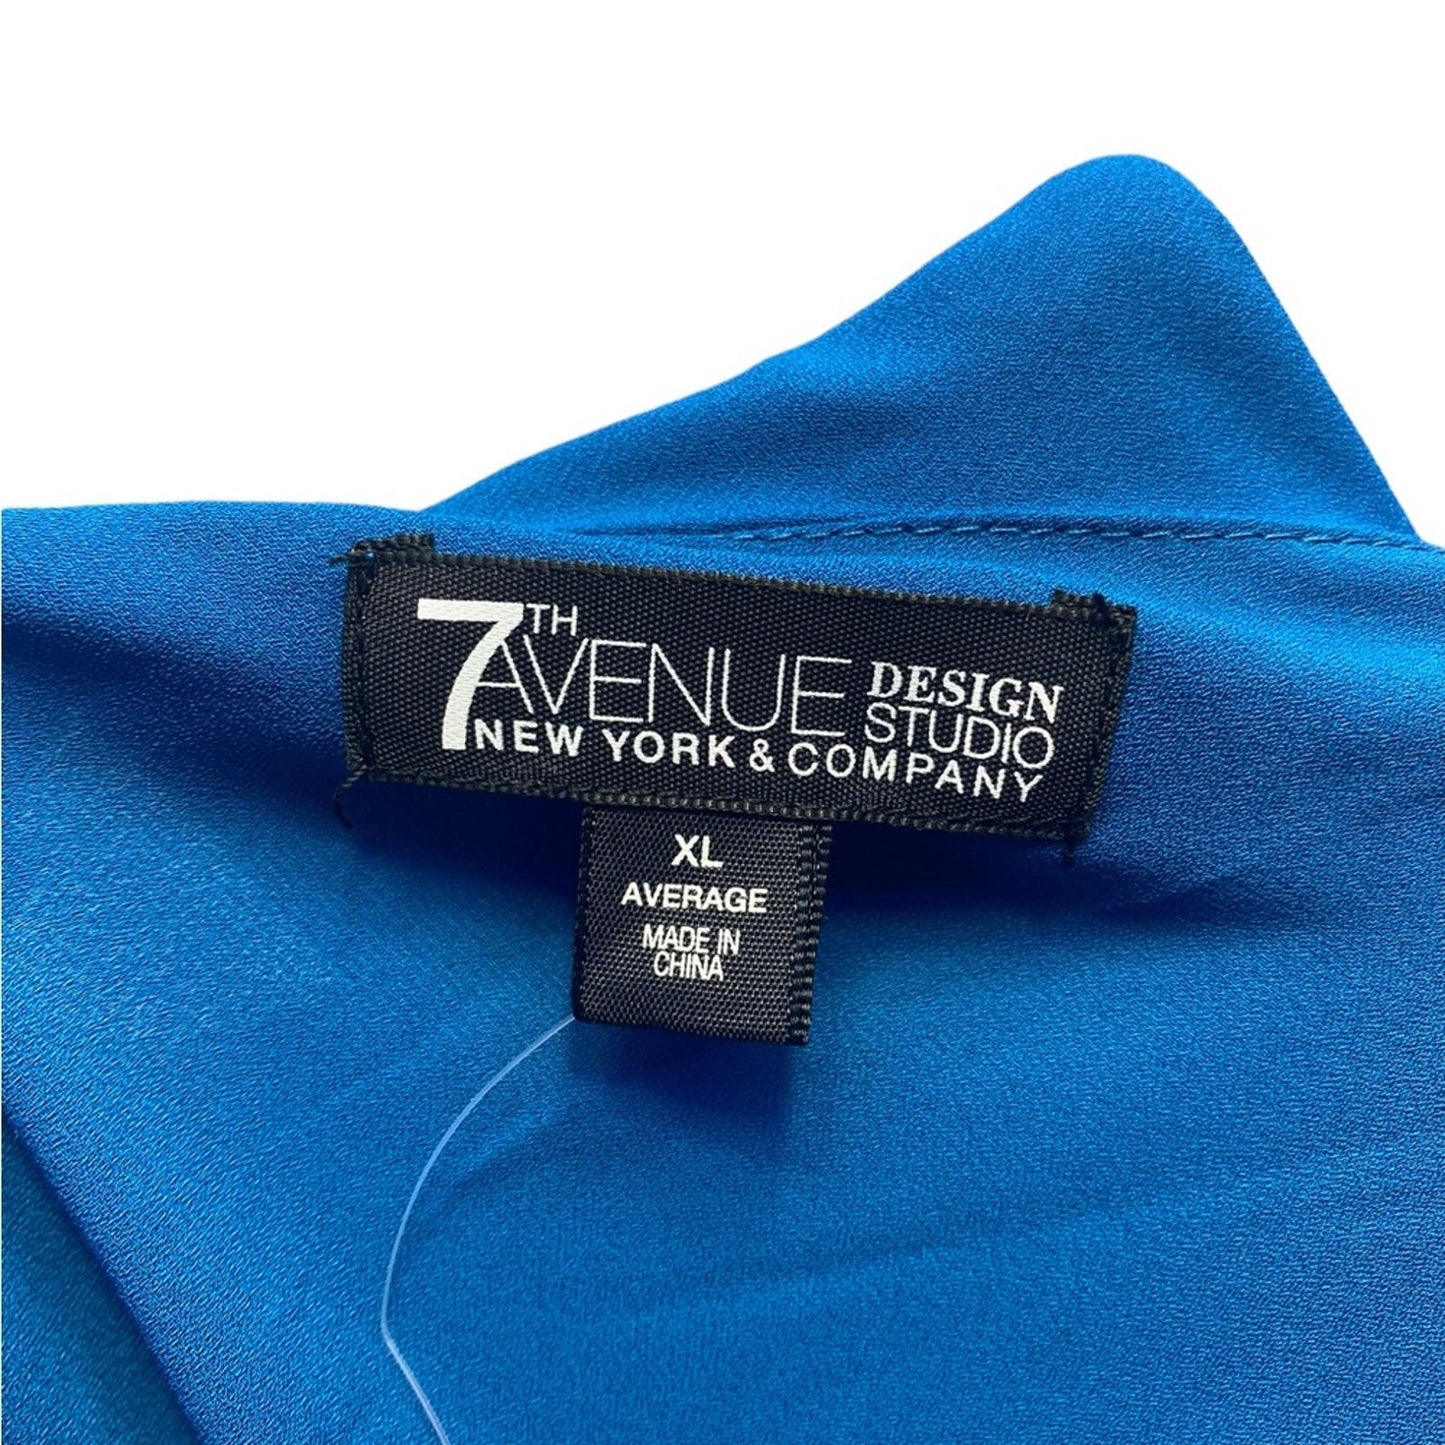 7th Avenue Deep Teal Shirt Cold Shoulder Shirt - NWT